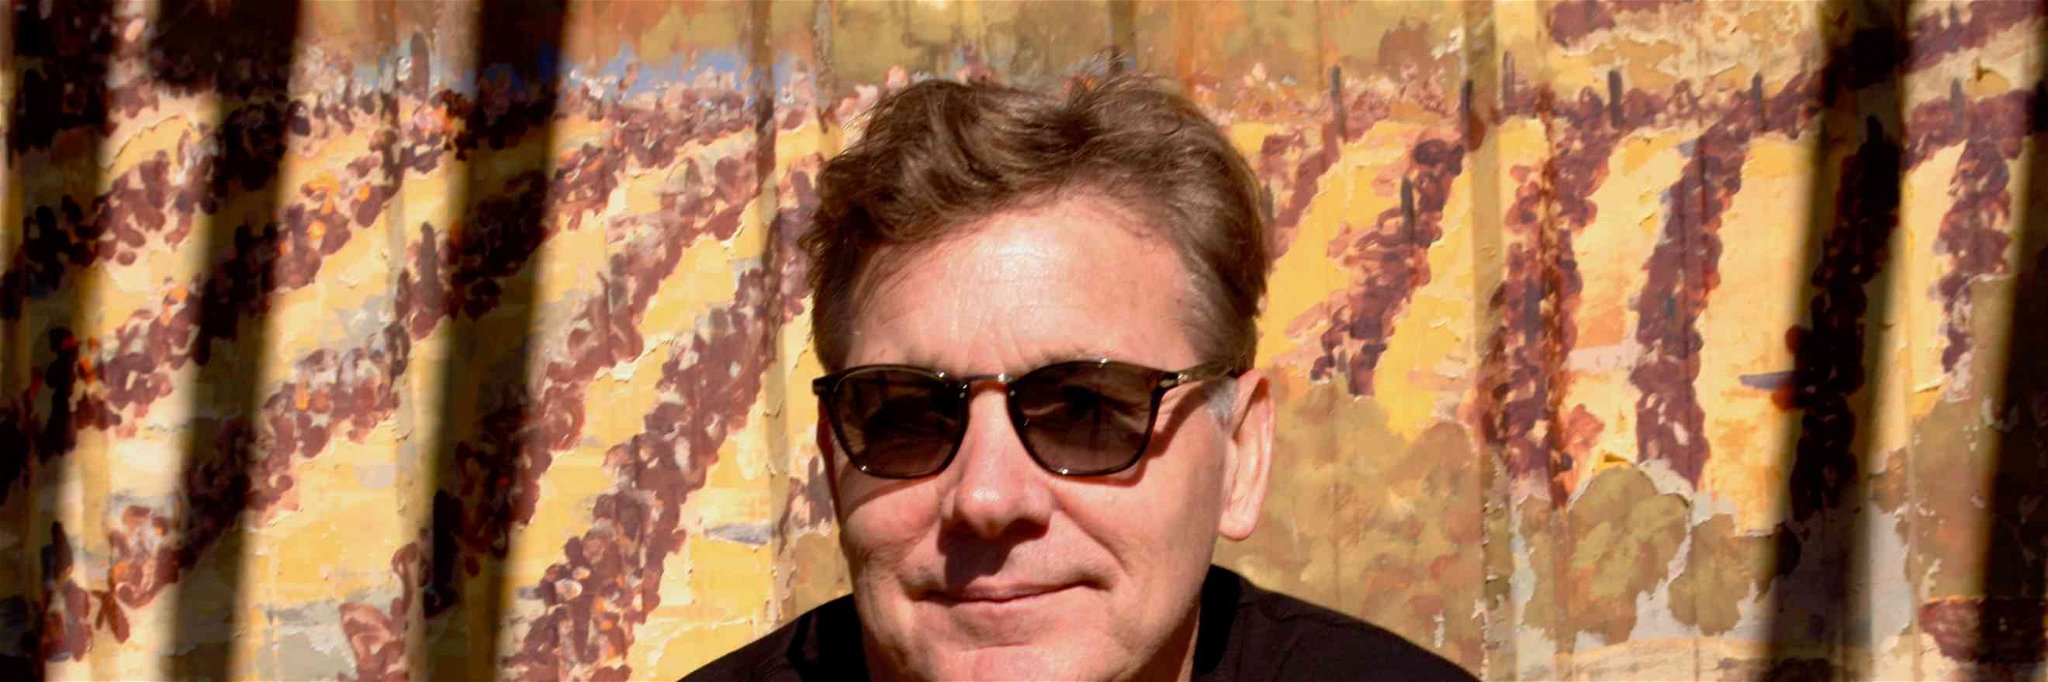 Rex Pickett, author of Sideways and novelist, California, USA